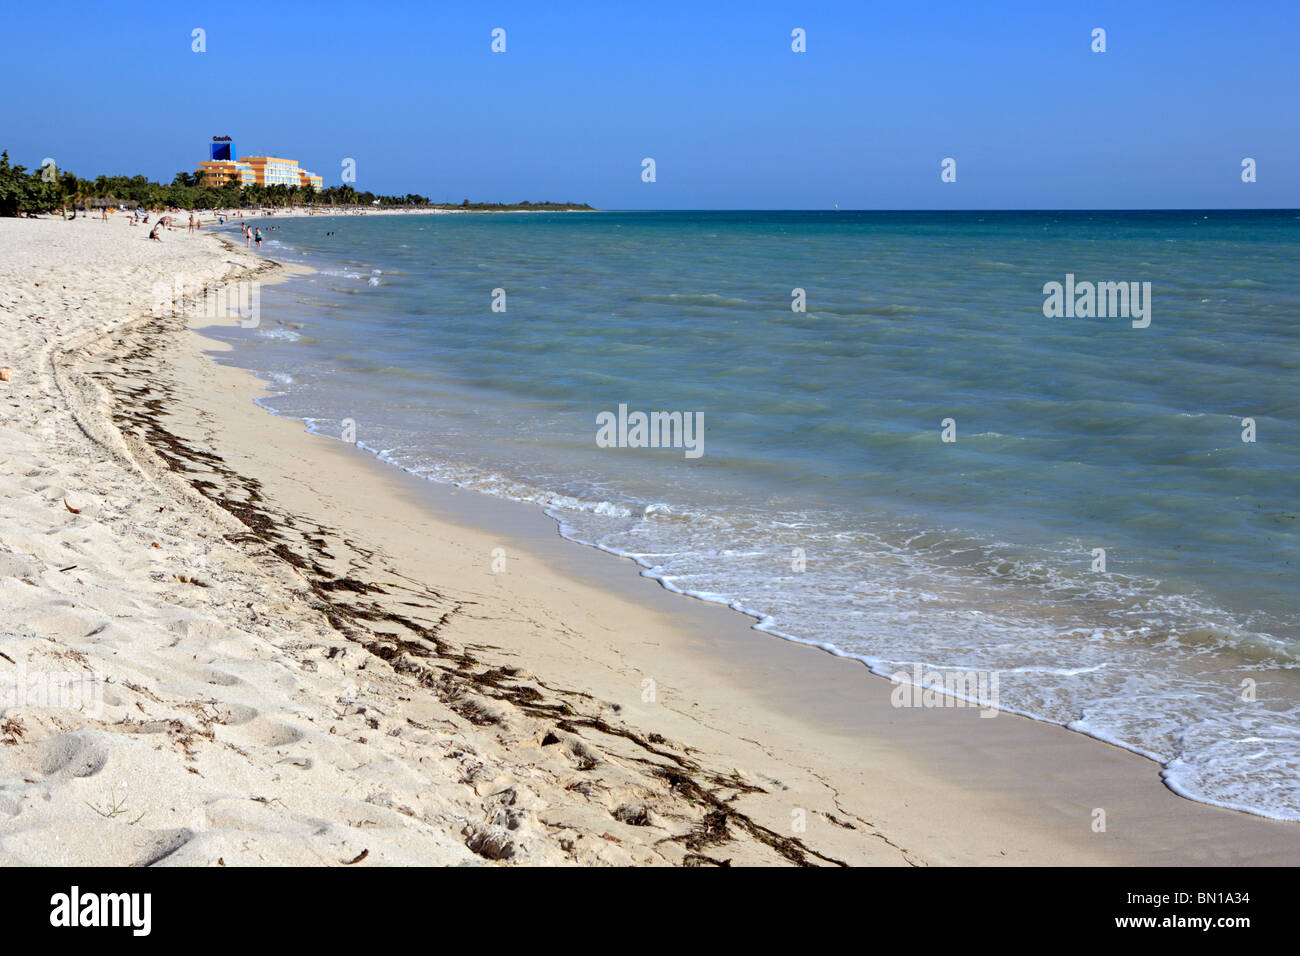 Ancon beach, near Trinidad, Cuba Stock Photo